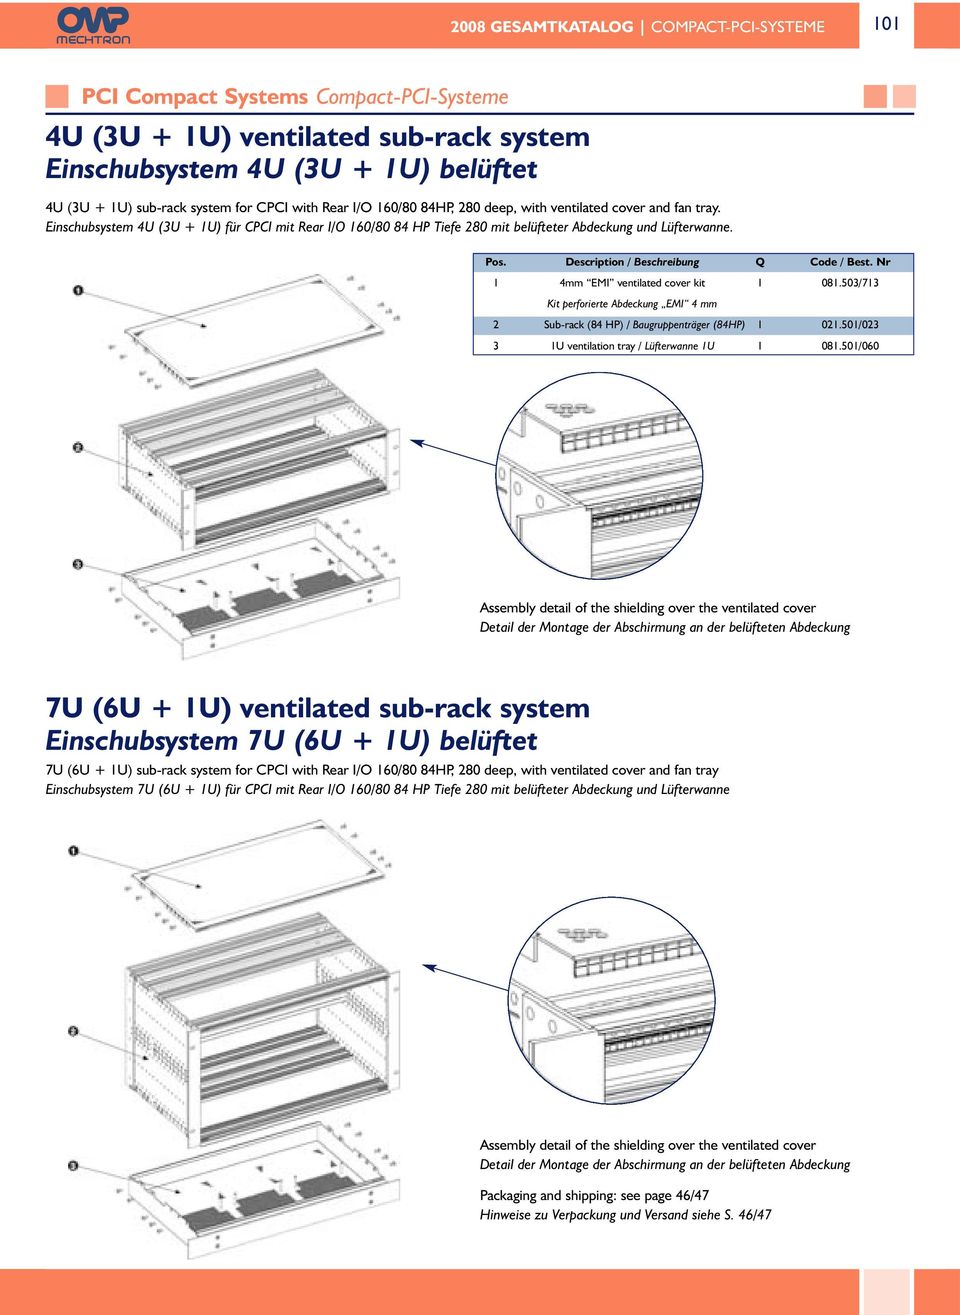 Nr 1 4mm EMI ventilated cover kit 1 081.503/713 Kit perforierte Abdeckung EMI 4 mm 2 Sub-rack (84 HP) / Baugruppenträger (84HP) 1 021.501/023 3 1U ventilation tray / Lüfterwanne 1U 1 081.